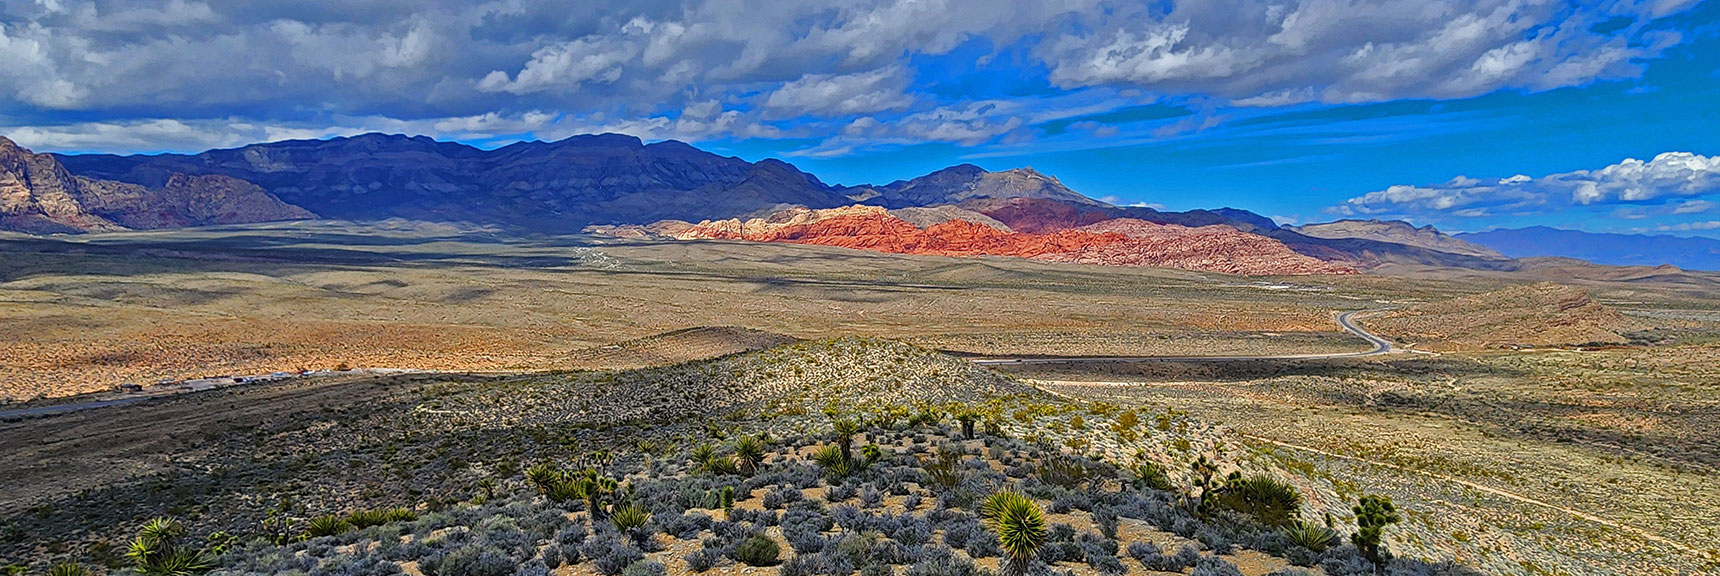 Red Rock Canyon; Damsel Peak, La Madre Ridgeline Background. | Western High Ridge | Blue Diamond Hill, Nevada